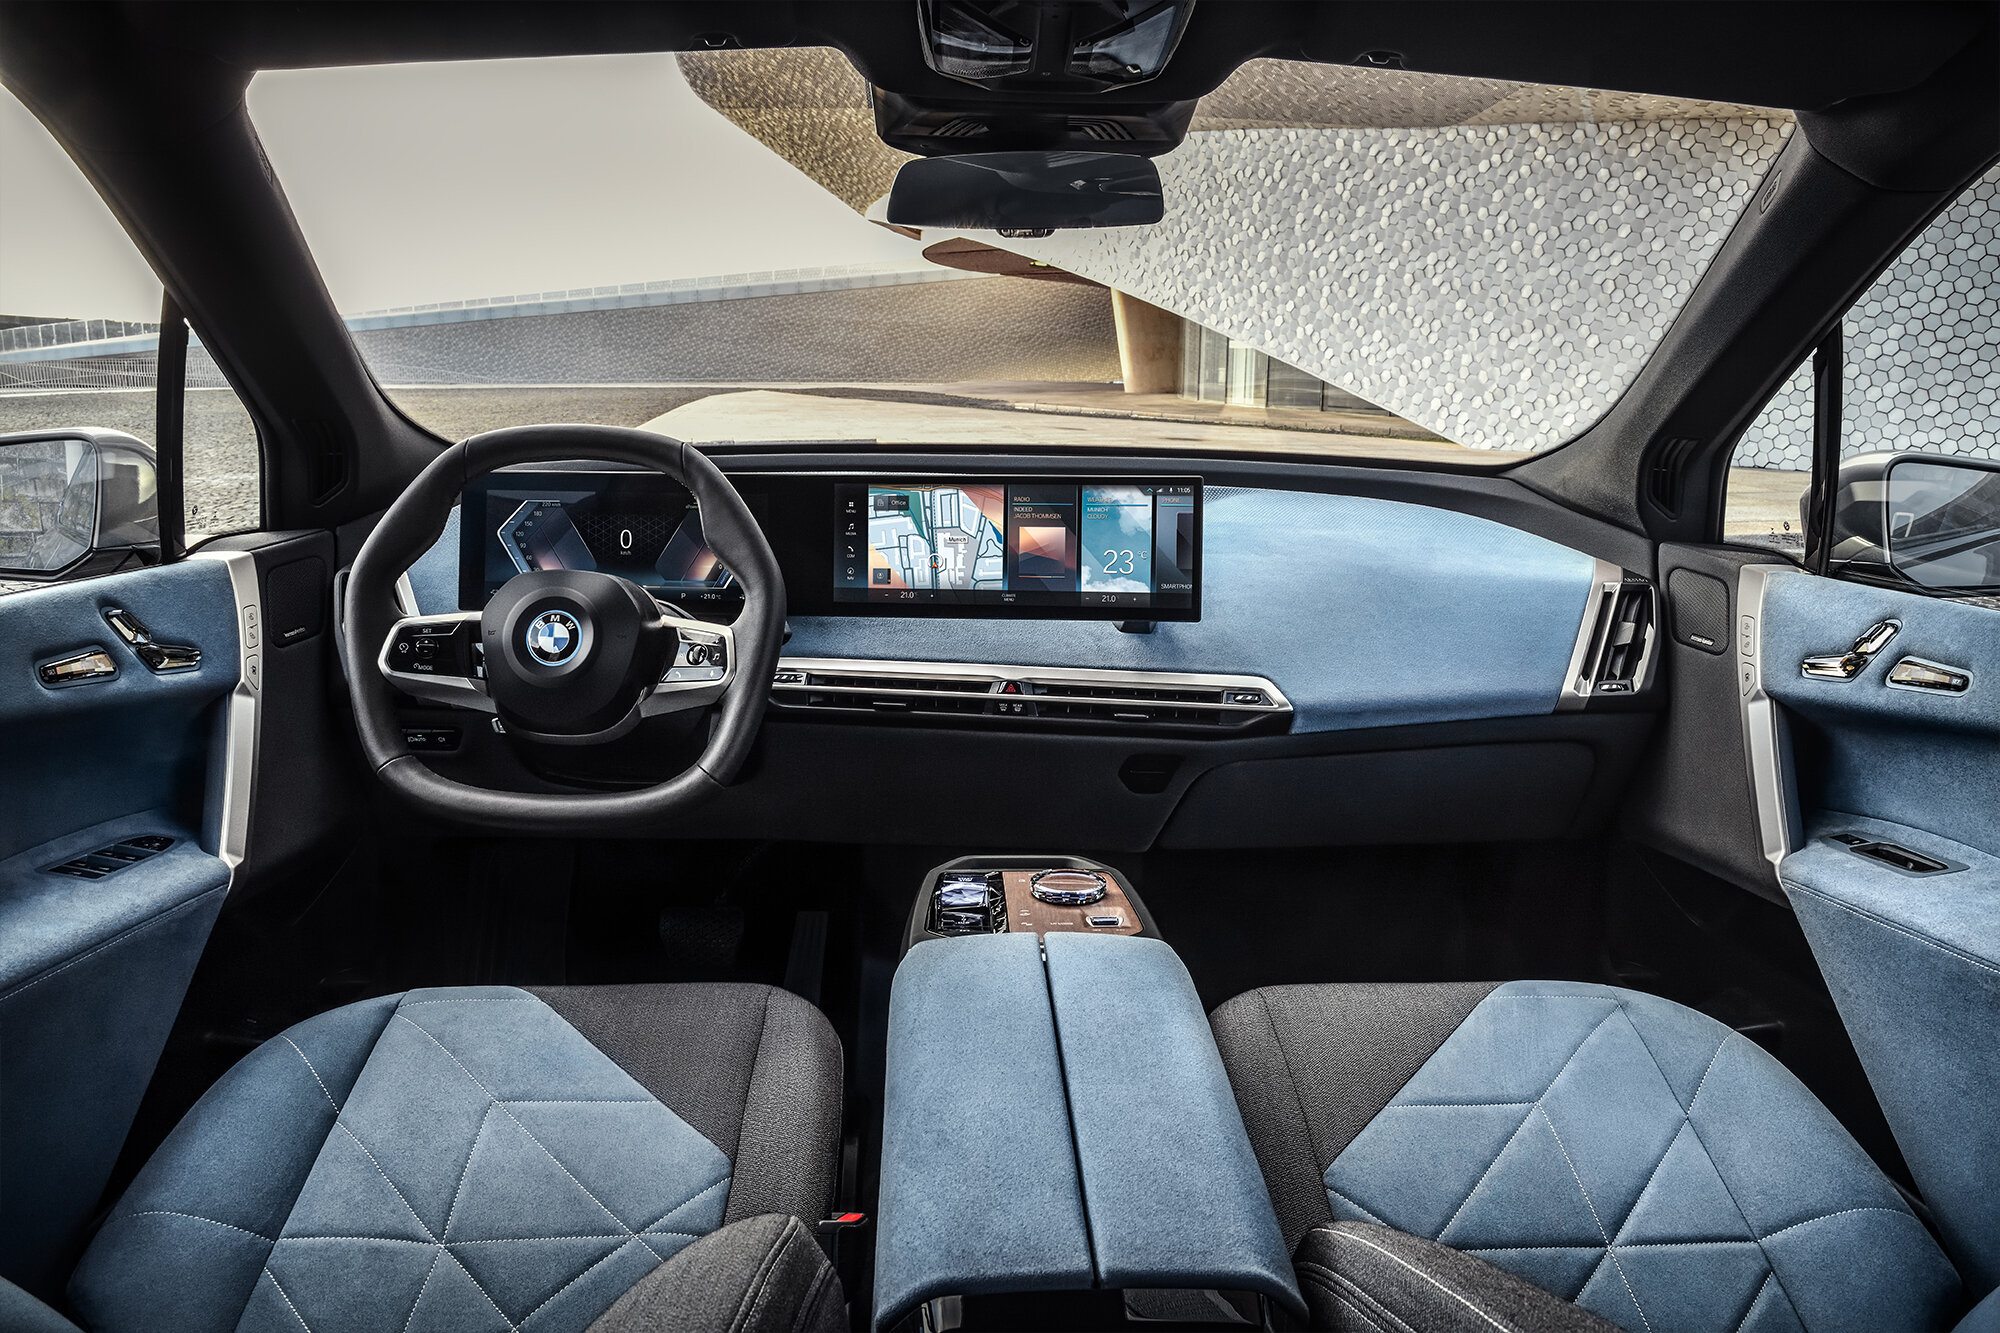 The new interior design of the BMW iX